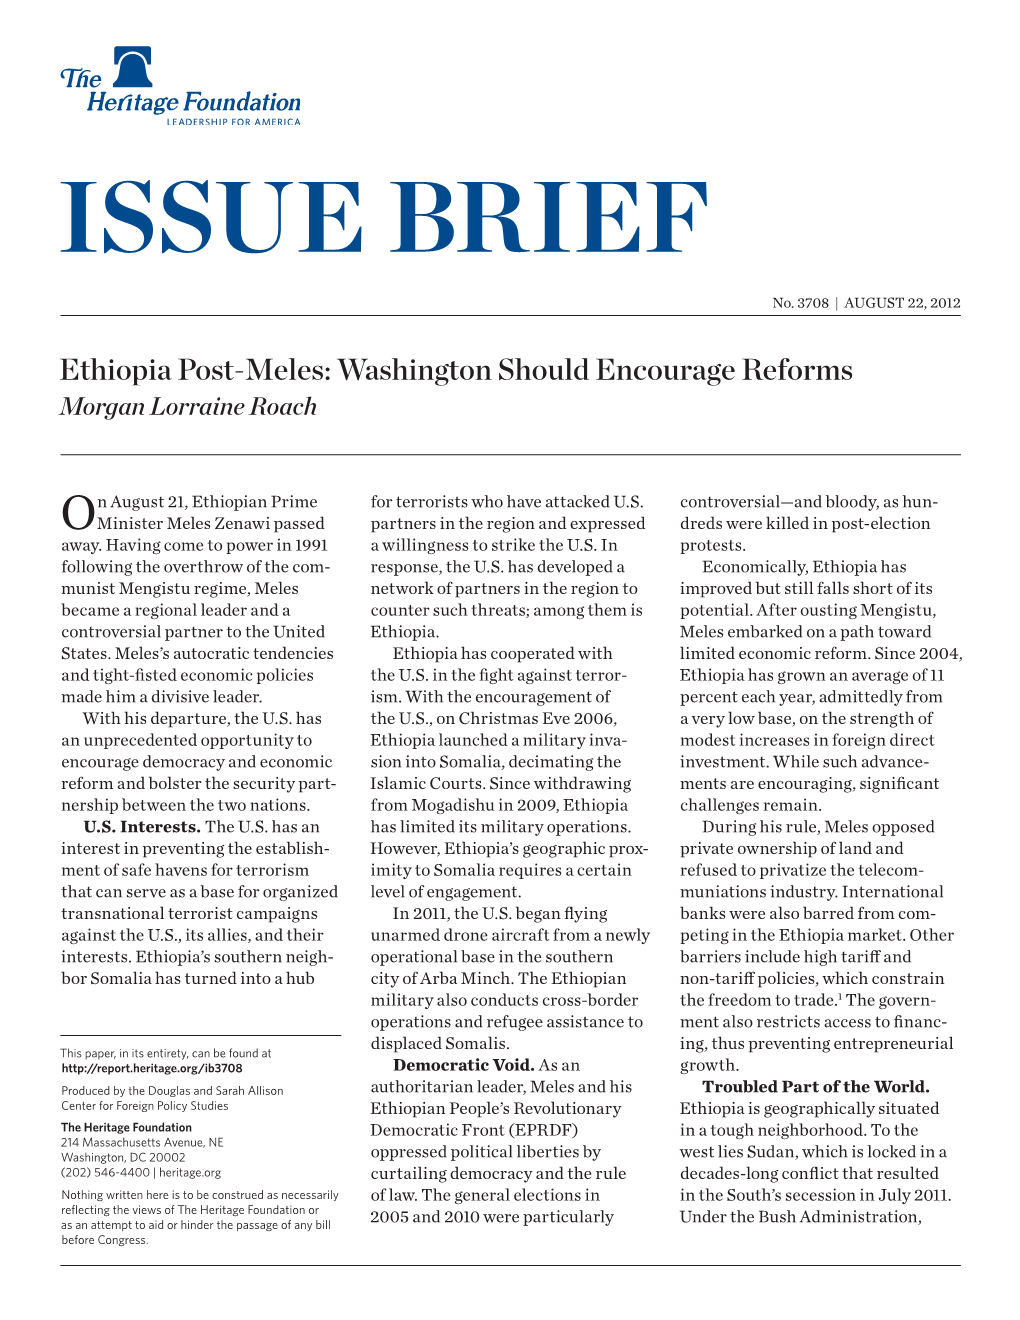 Ethiopia Post-Meles: Washington Should Encourage Reforms Morgan Lorraine Roach